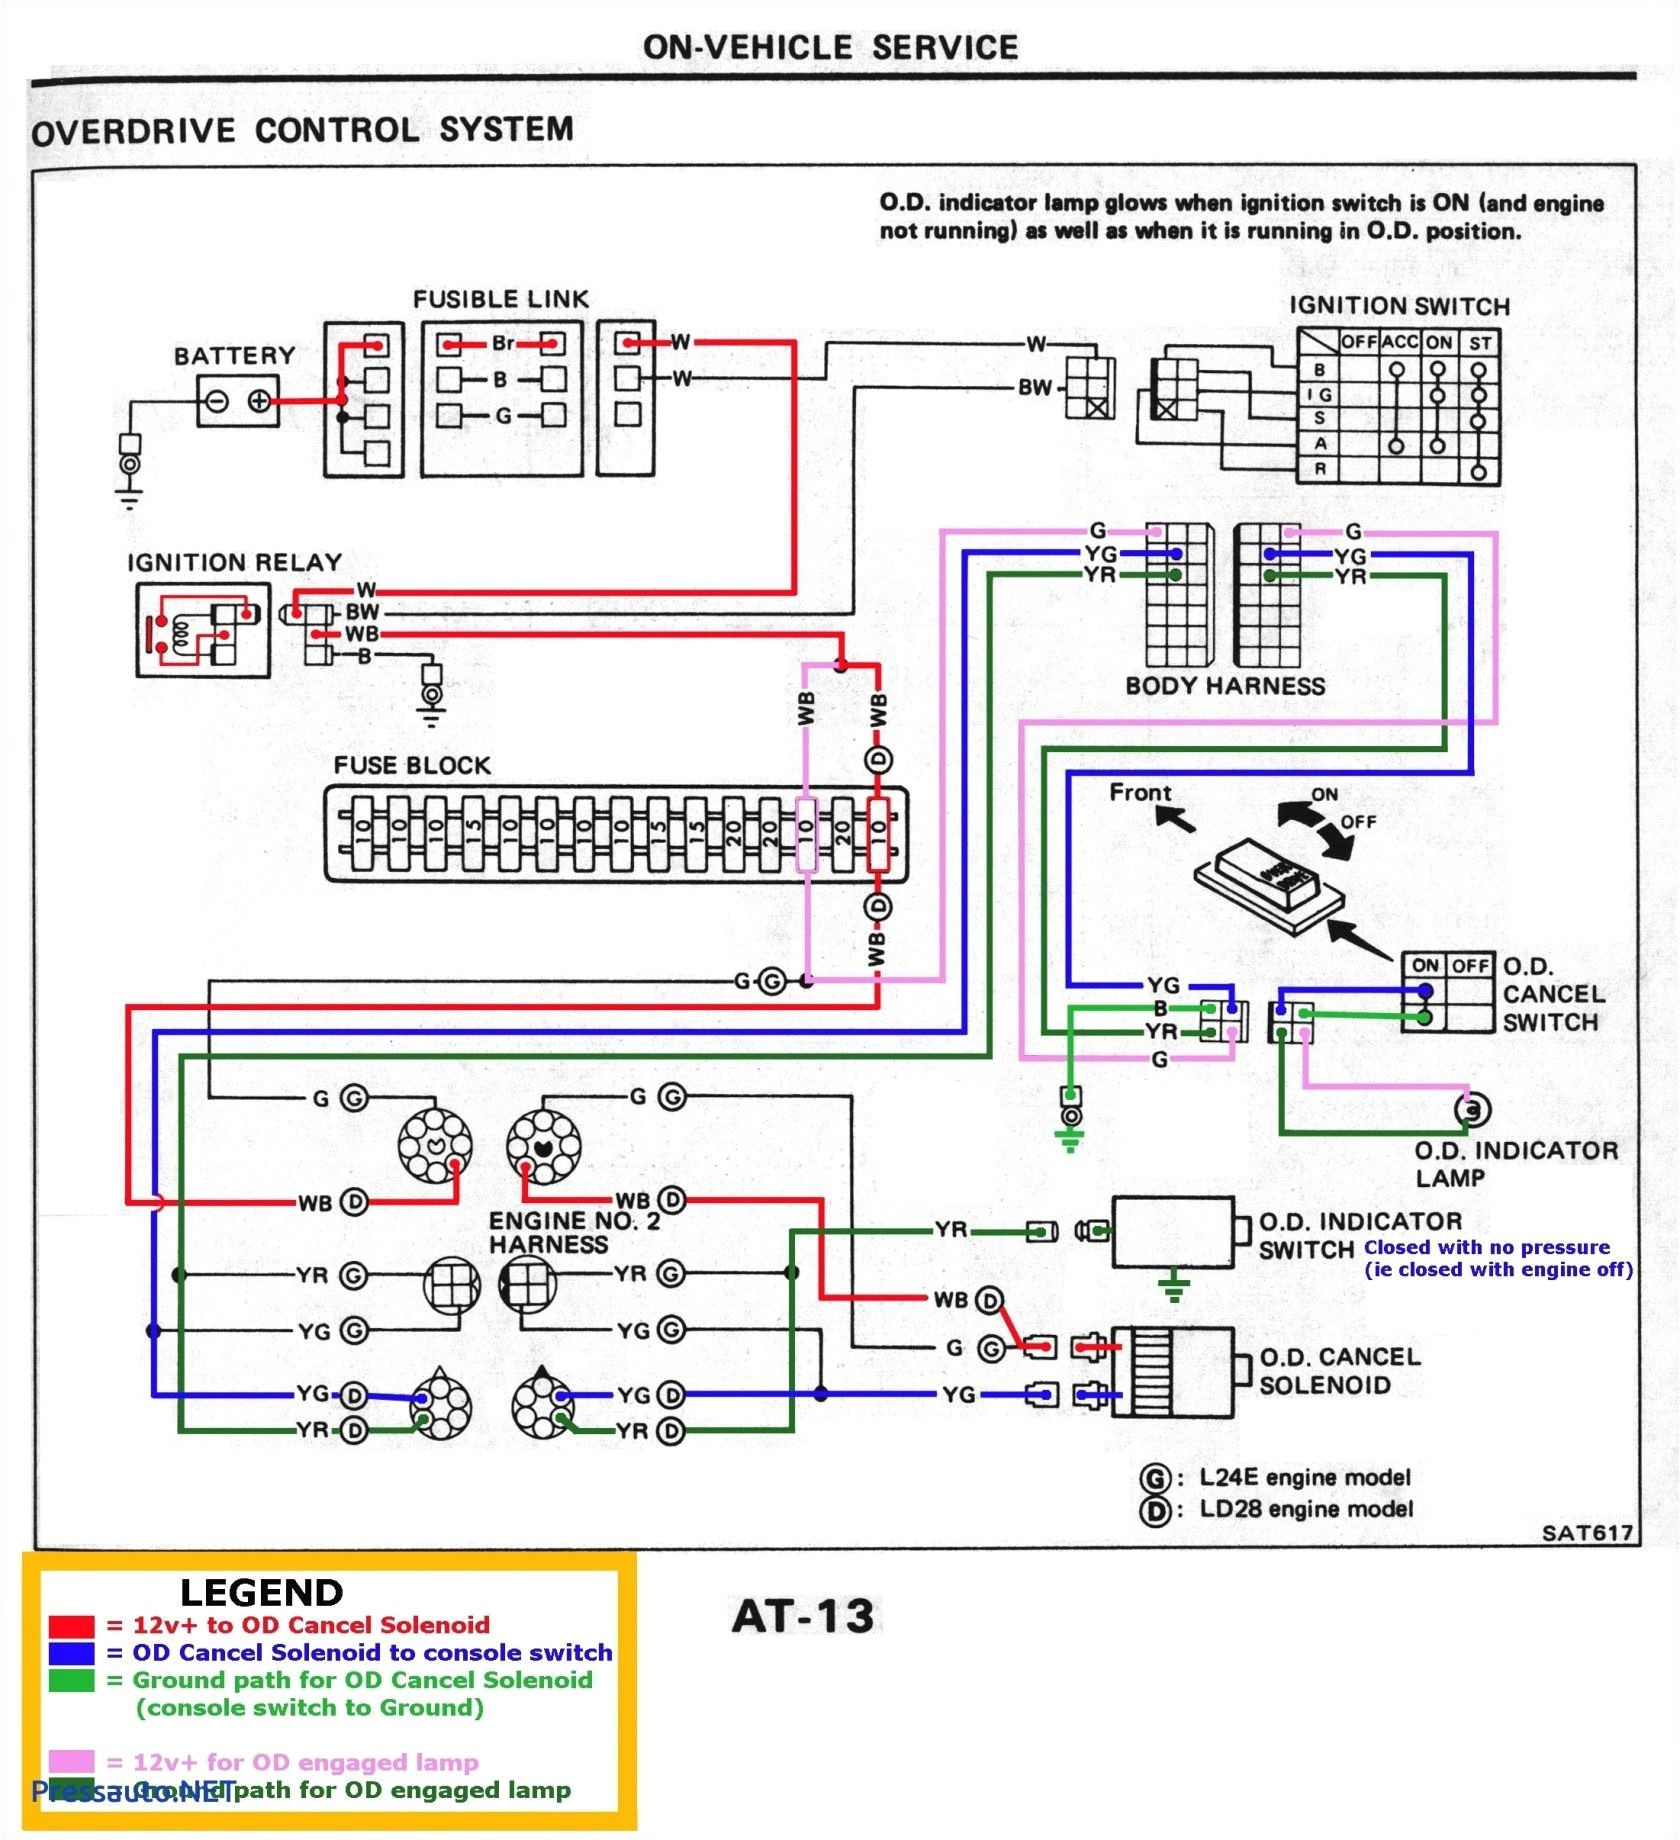 cat5 to hdmi wiring diagram cat 5 wiring diagram for house save wiring diagram cat5 wire diagram new cat5 to hdmi 9f jpg